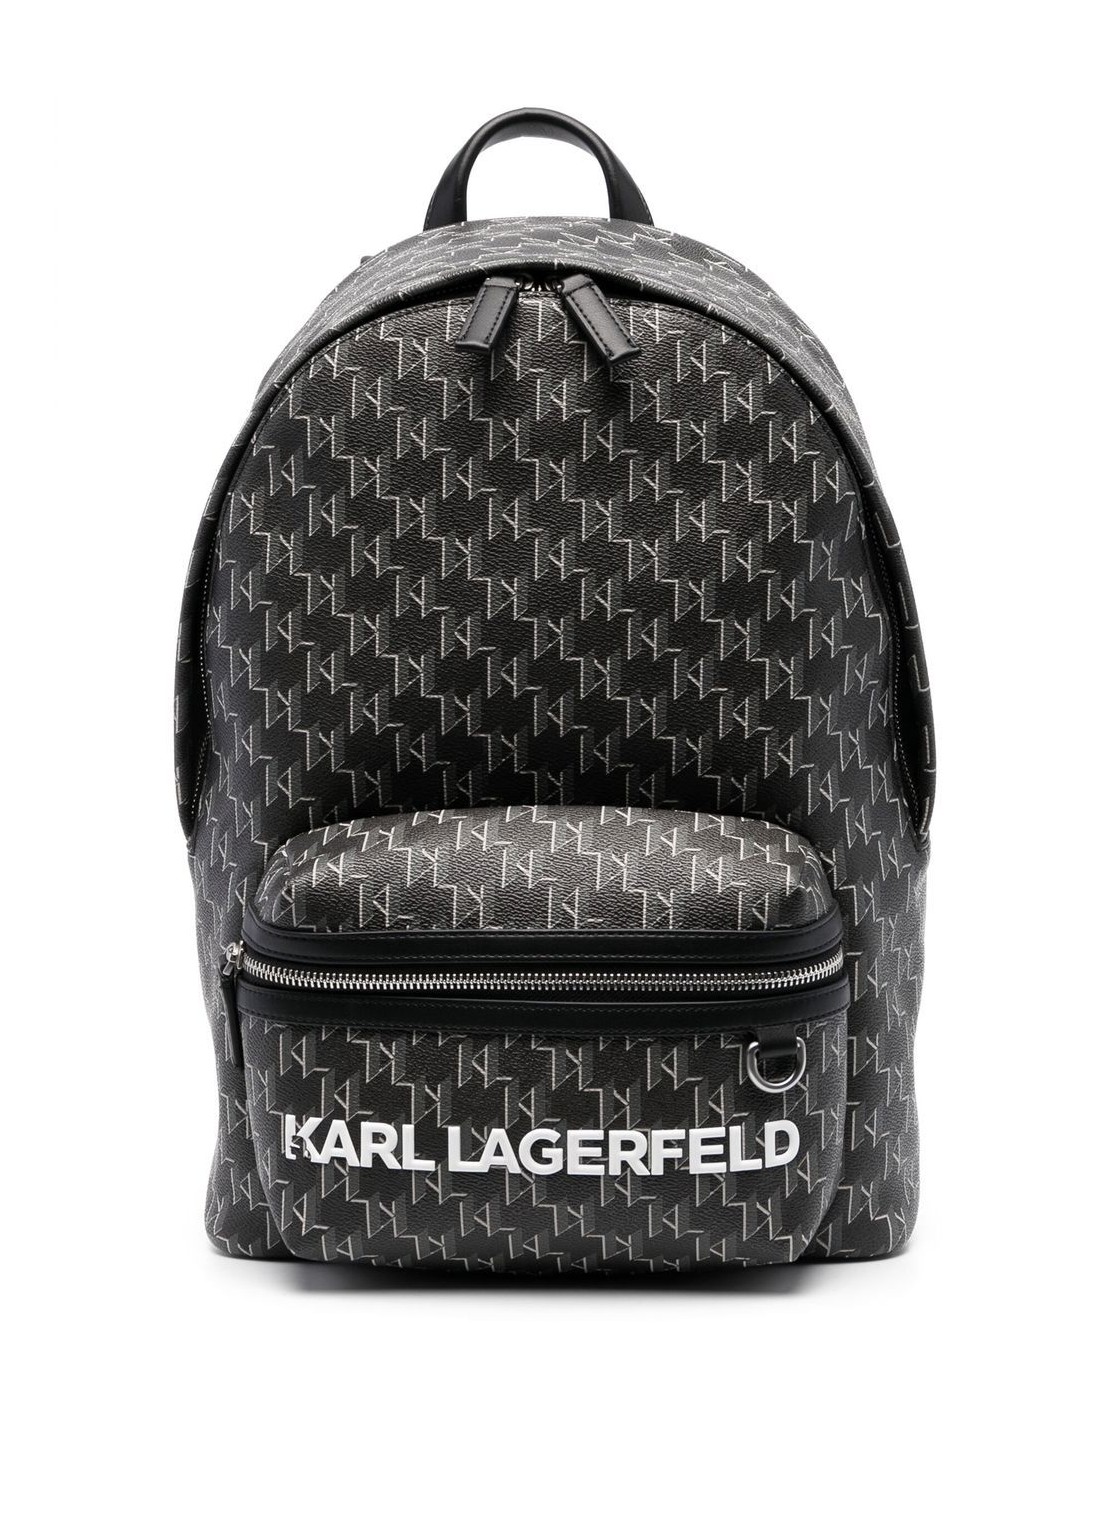 KARL LAGERFELD PARIS Simone Purse/Backpack | eBay